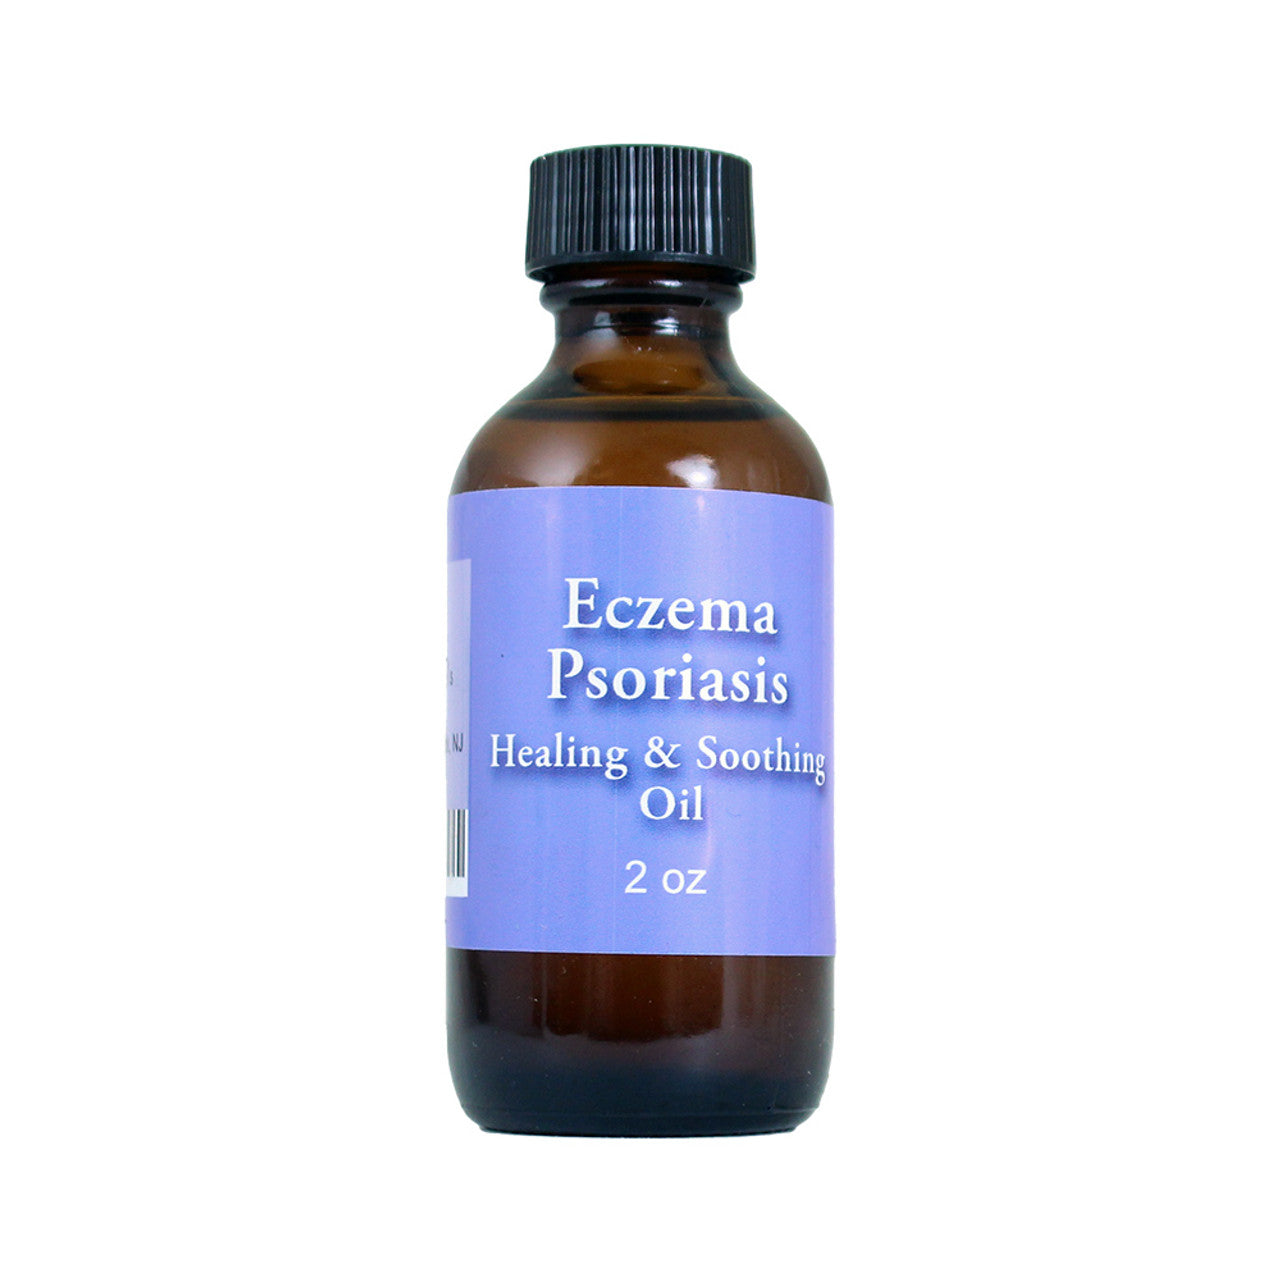 Eczema & Psoriasis Healing Oil